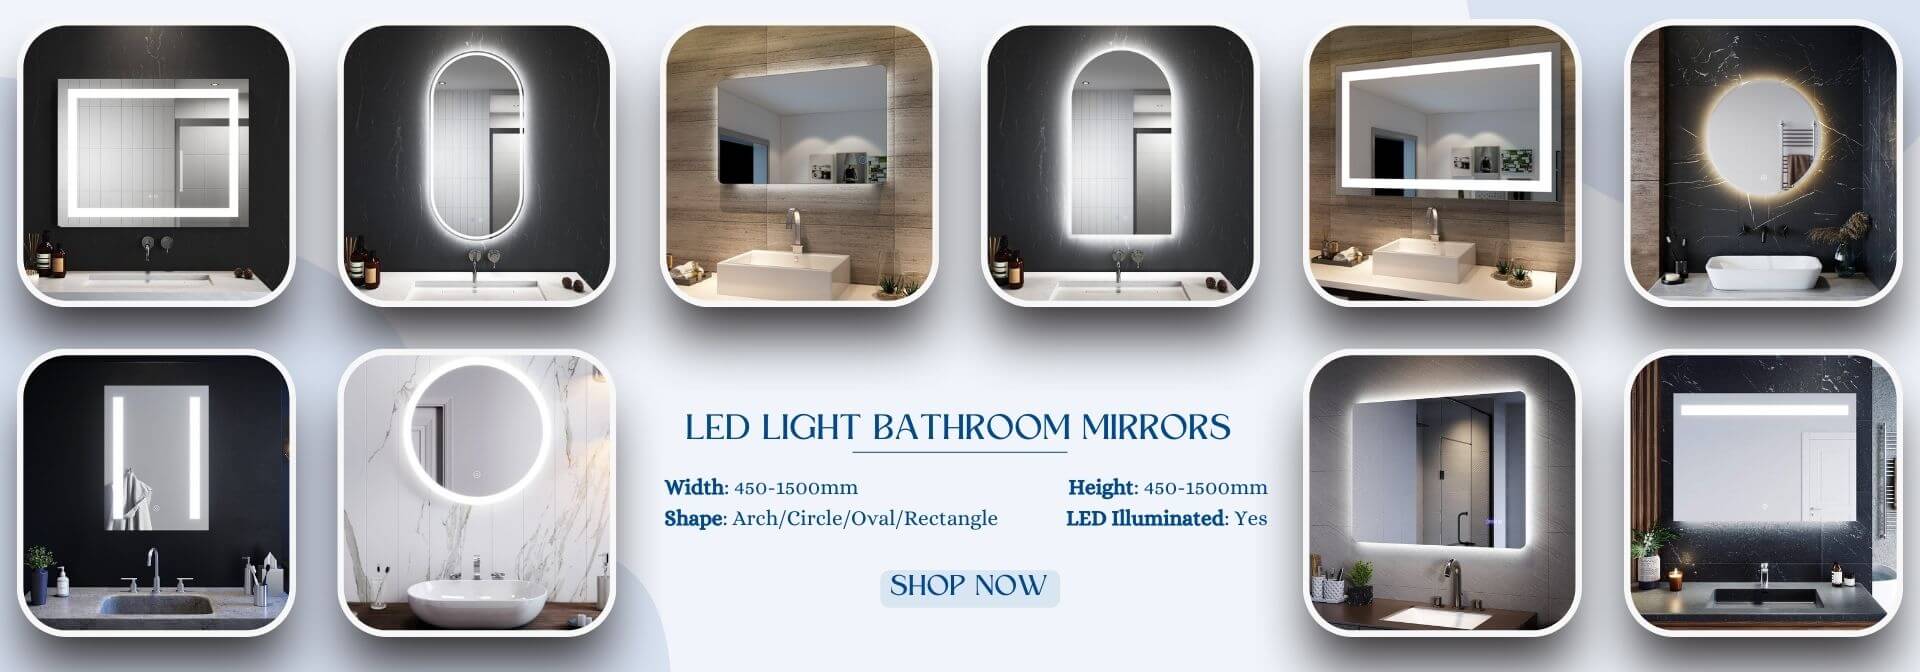 ELEGANTSHOWERS_LED_Light_Bathroom_Mirrors_2023091901_PC_banner